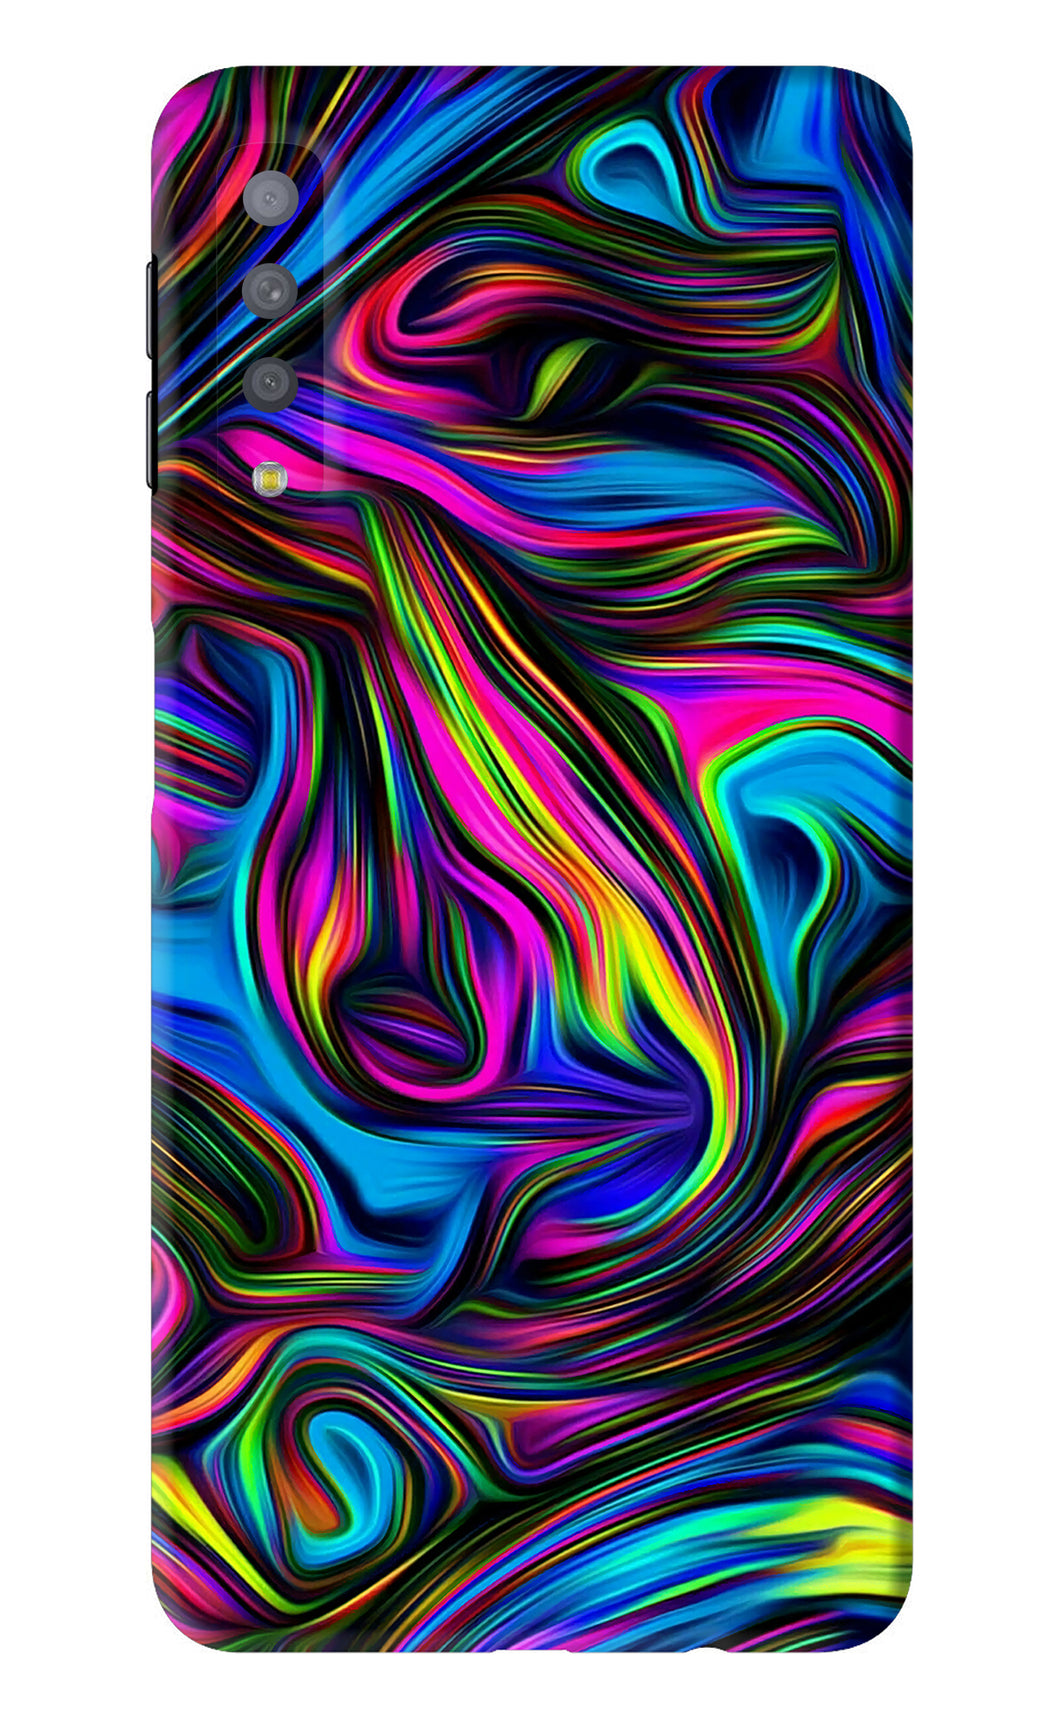 Abstract Art Samsung Galaxy A7 2018 Back Skin Wrap